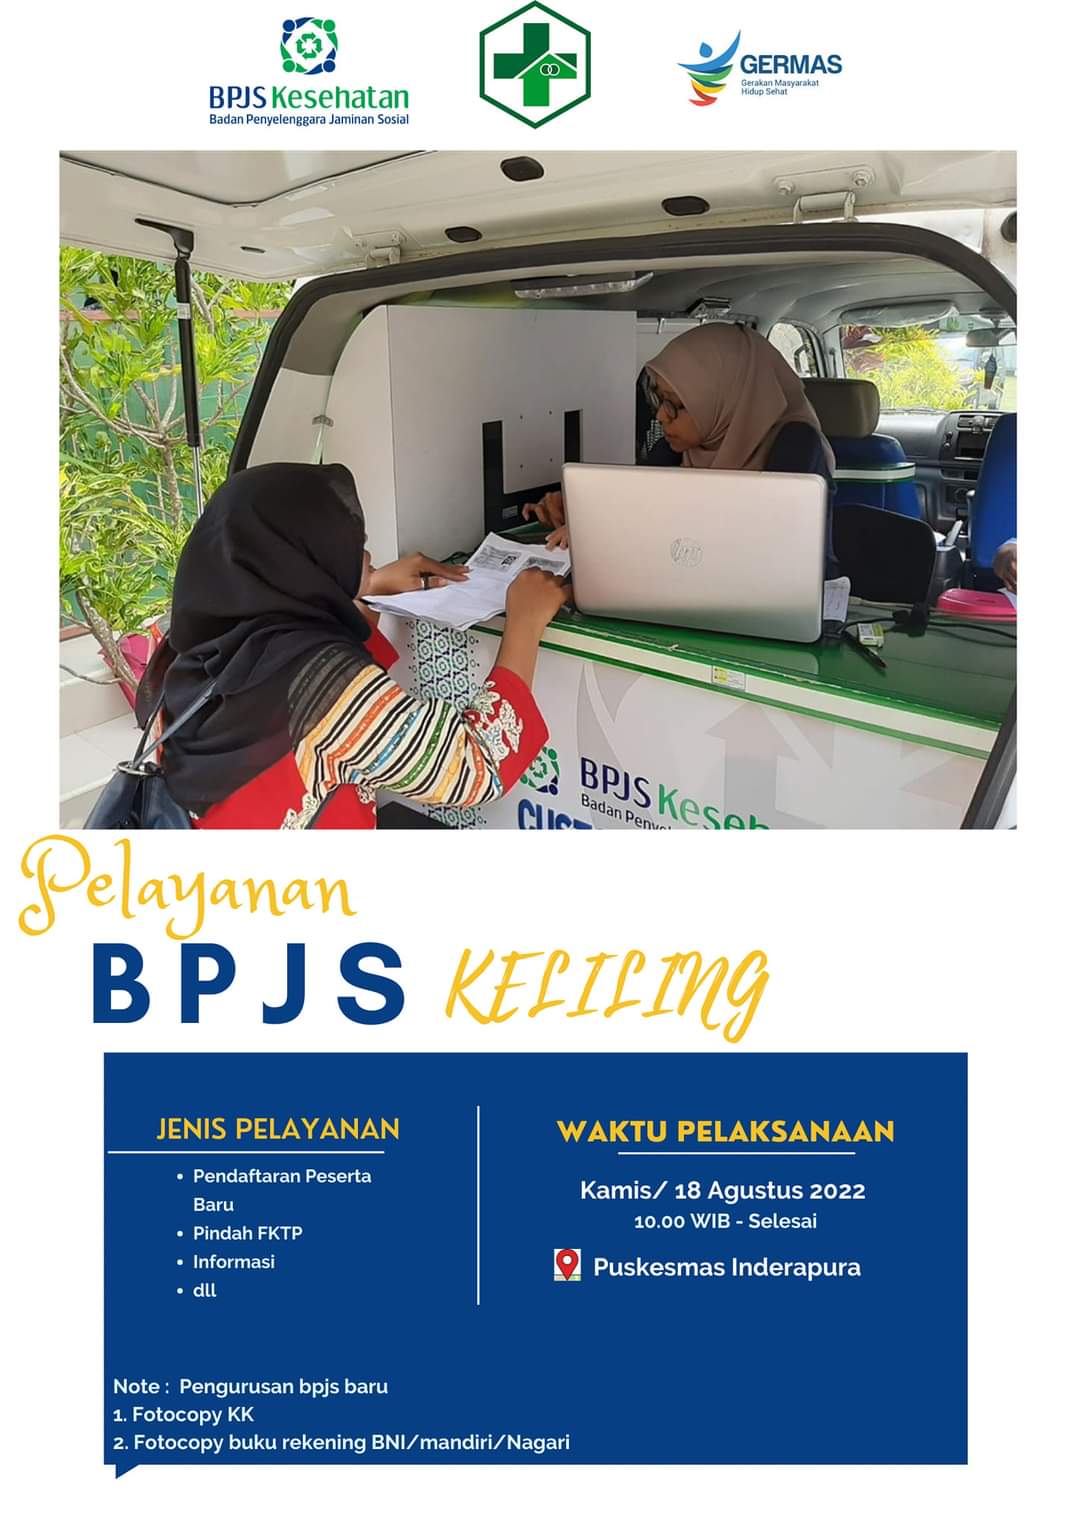 Jadwal Pelayanan BPJS Kesehatan Keliling  puskesmas Inderapura